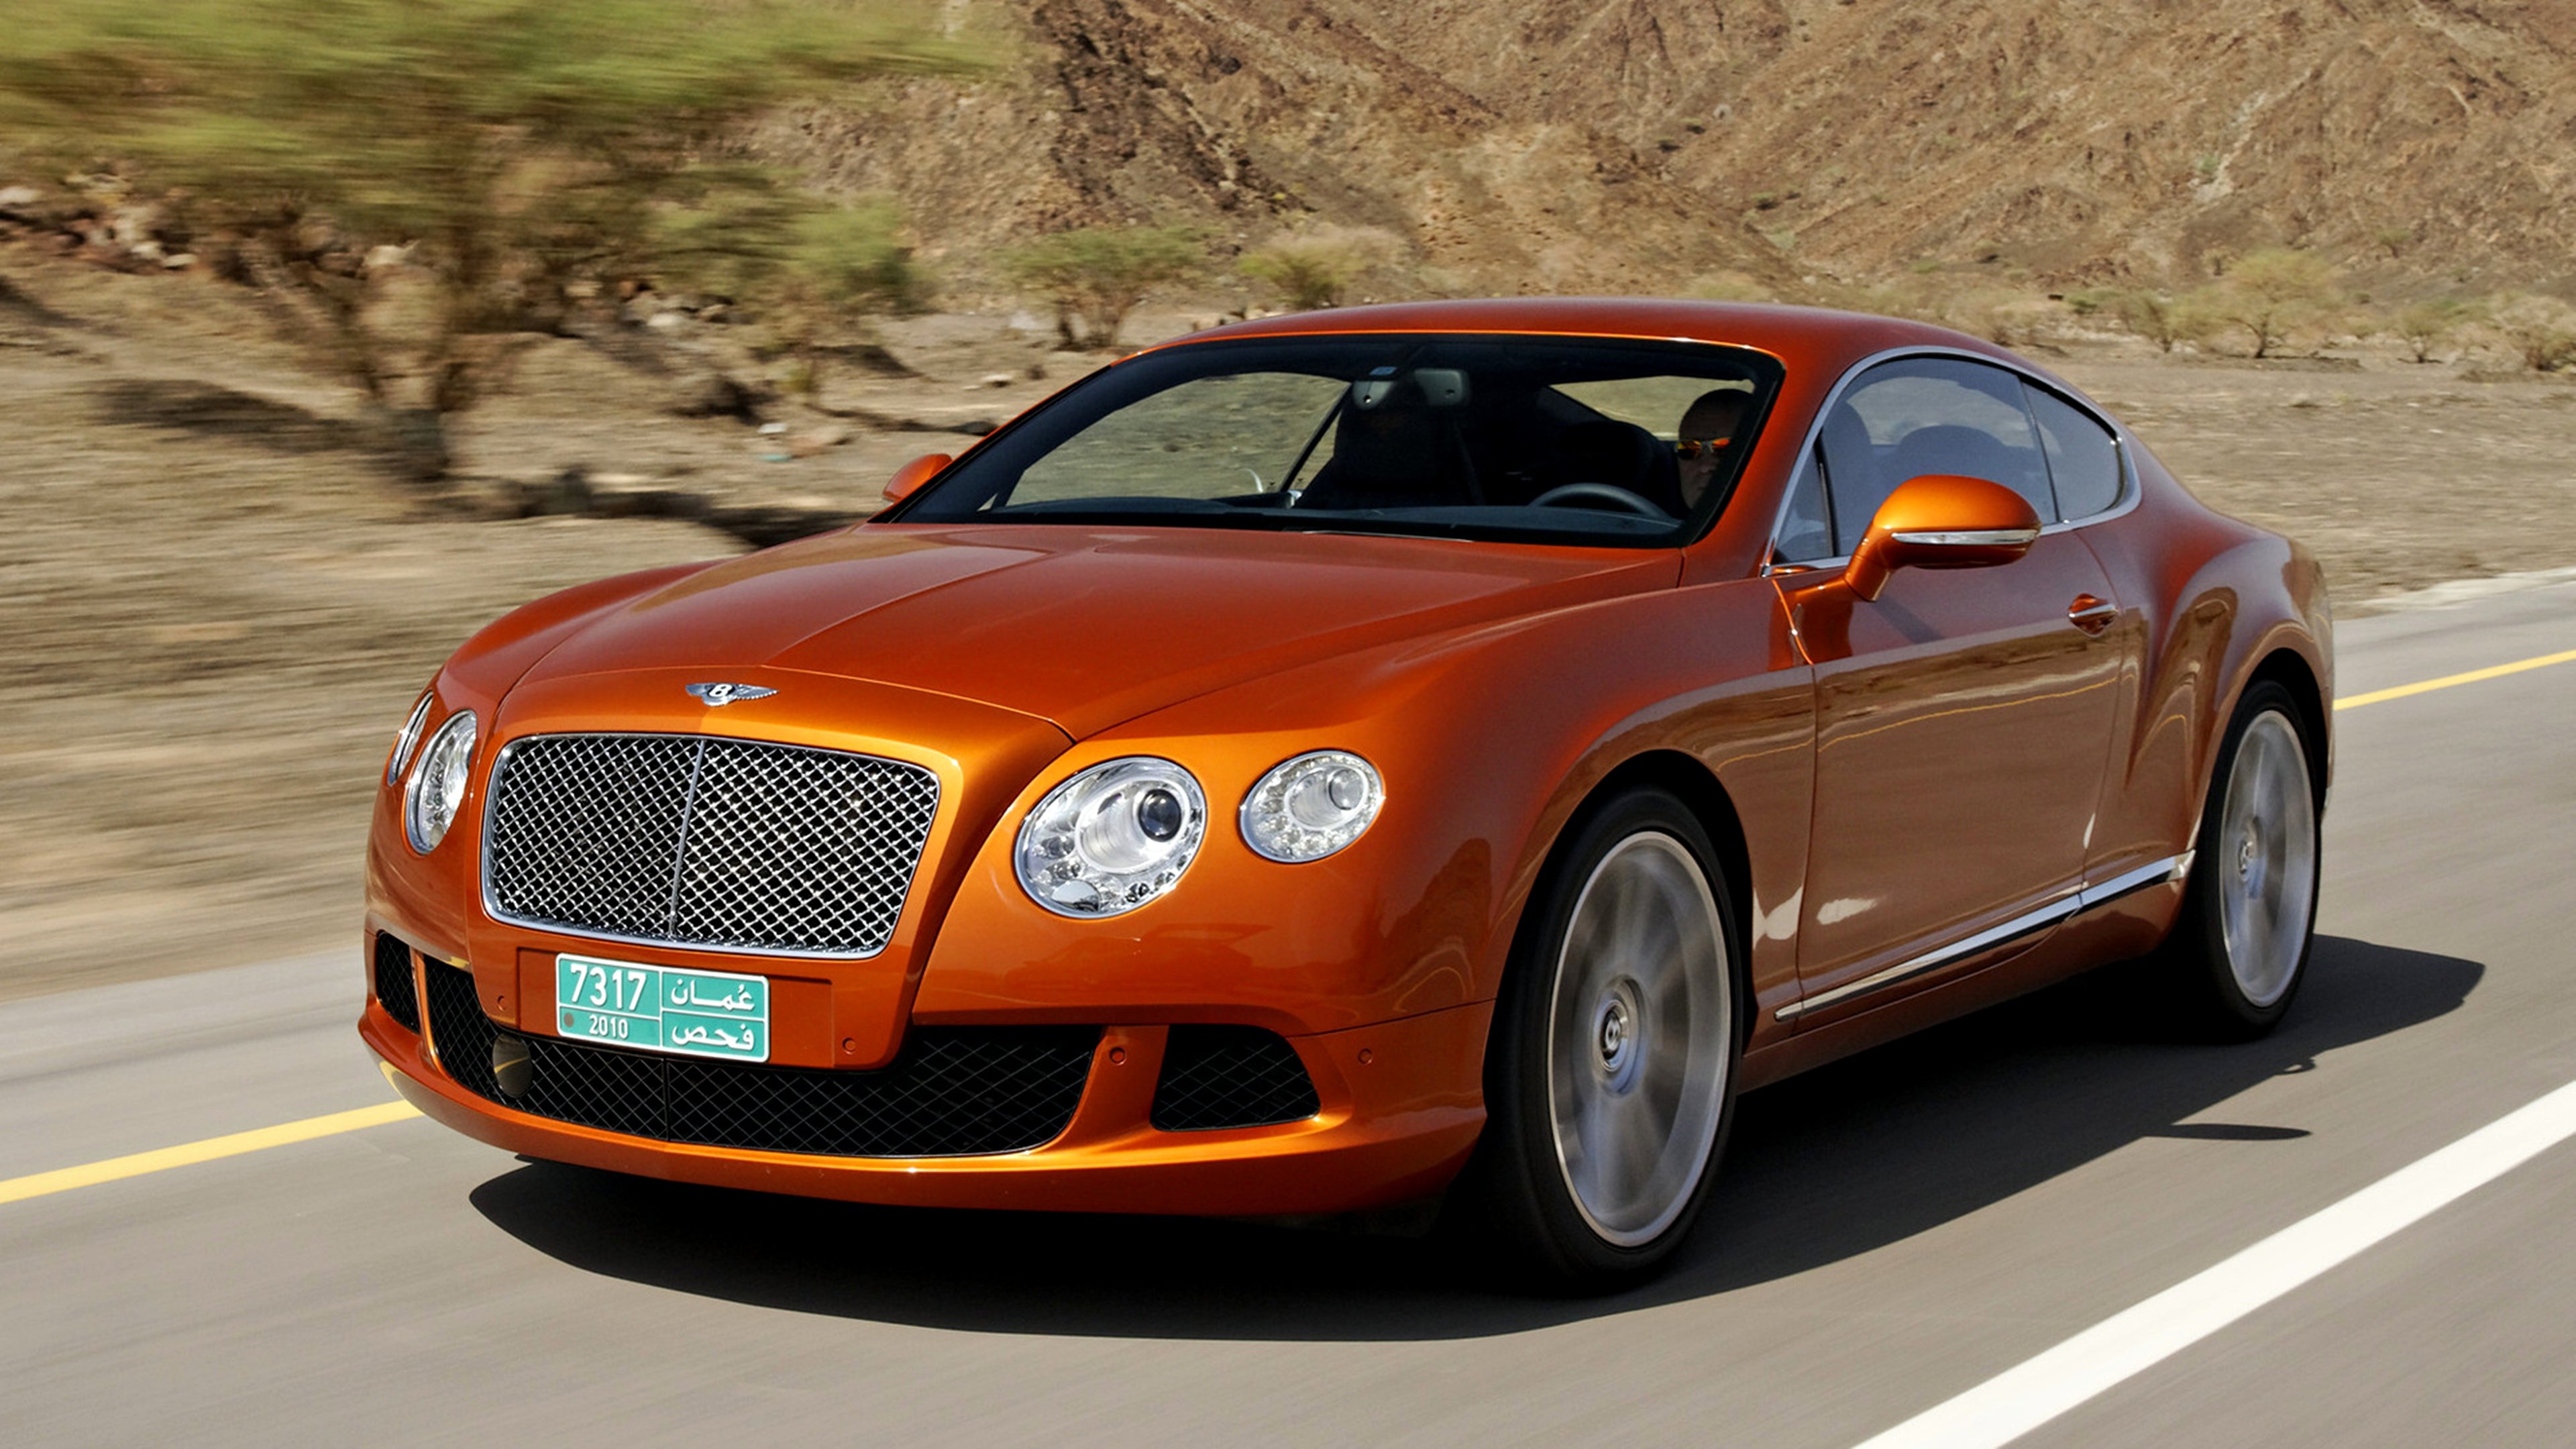 2011, Bentley, Continental, Gt, Desert, Cars, Landscape, Orange, Oman, Road, Speed, Motors, Luxury Wallpaper